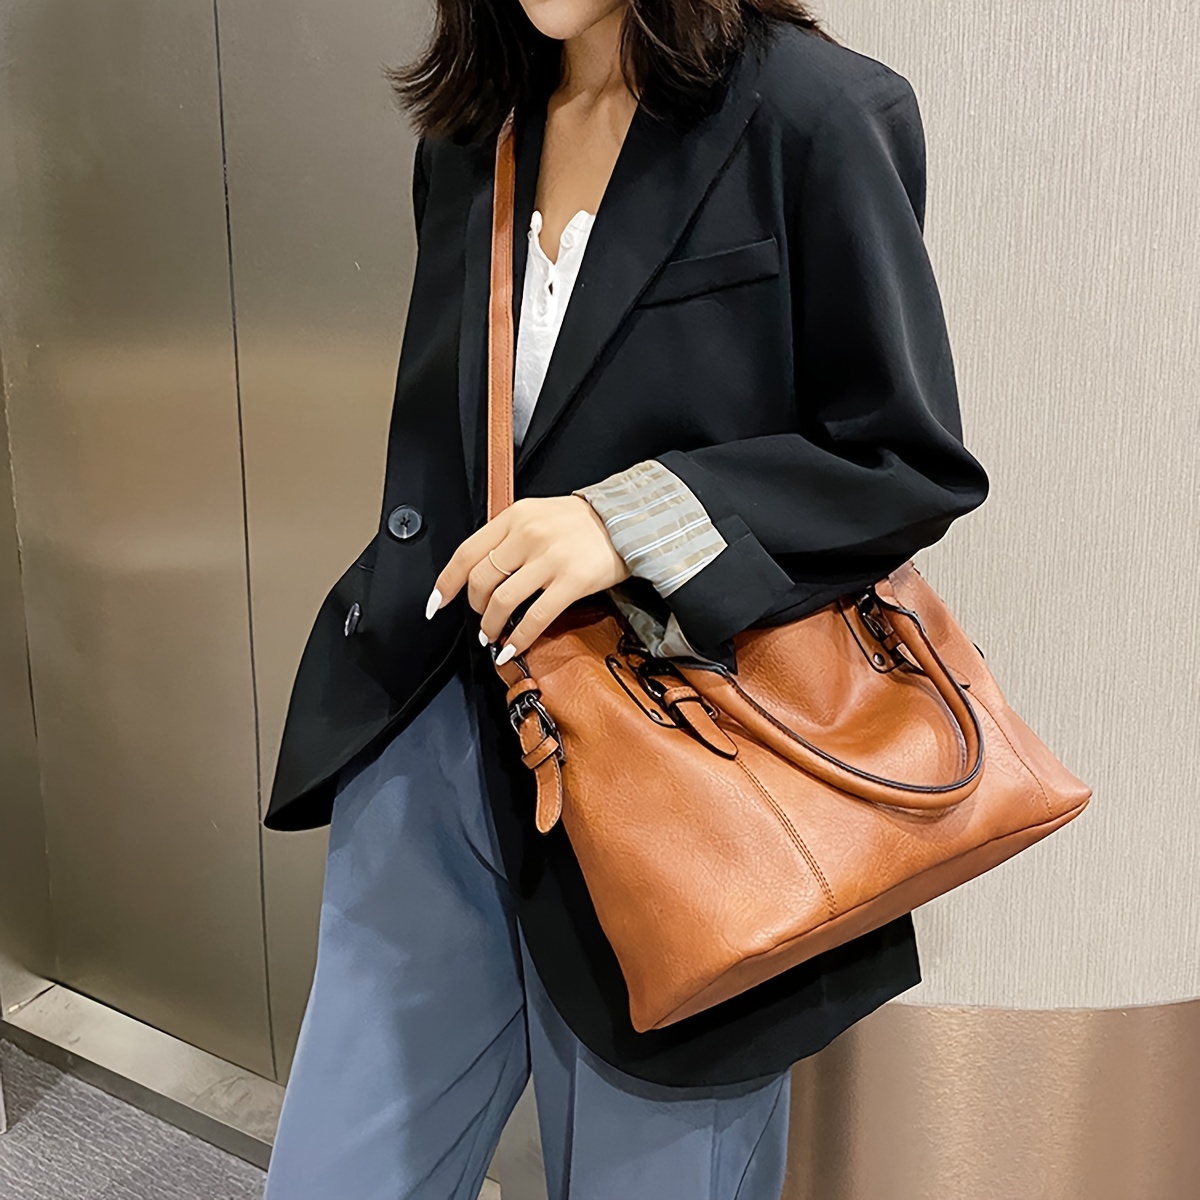 Genuine Leather Women Fashion Shoulder Tote Bag